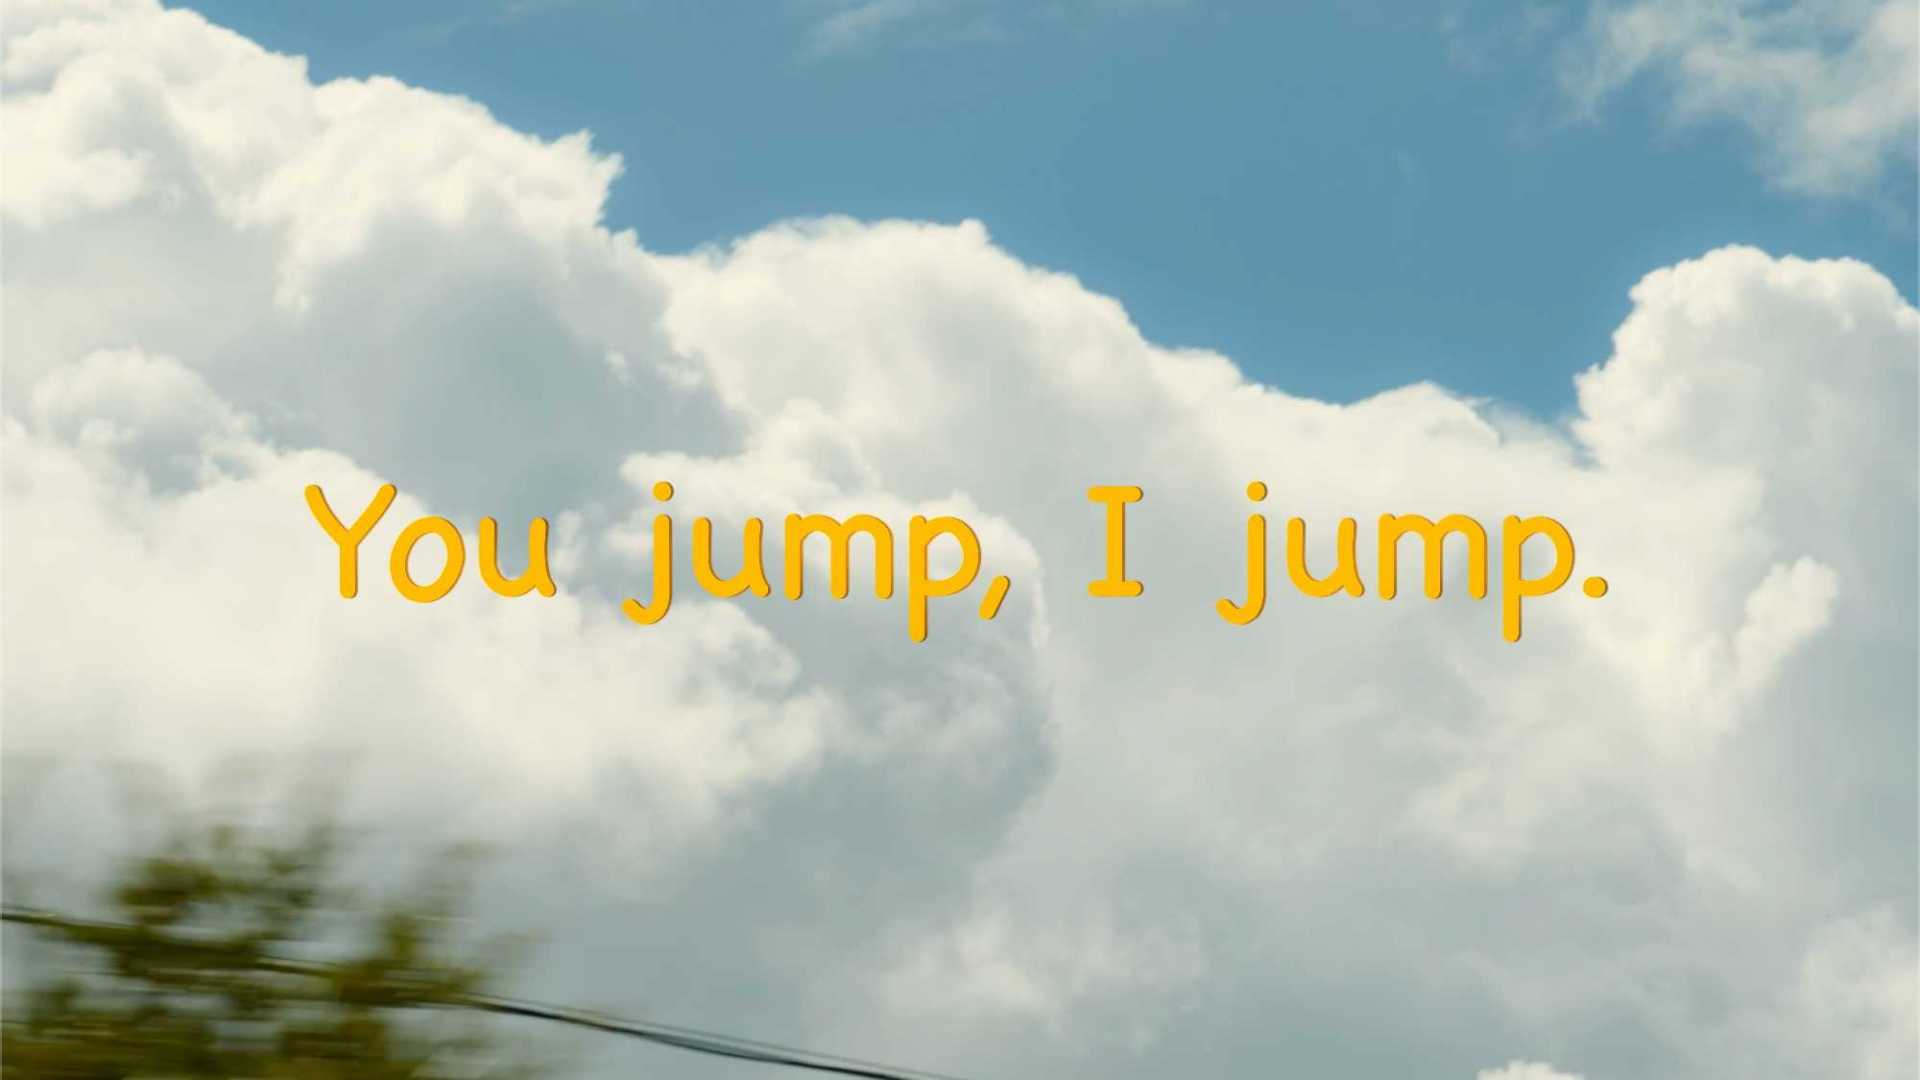 You jump,I jump. 一起坠落